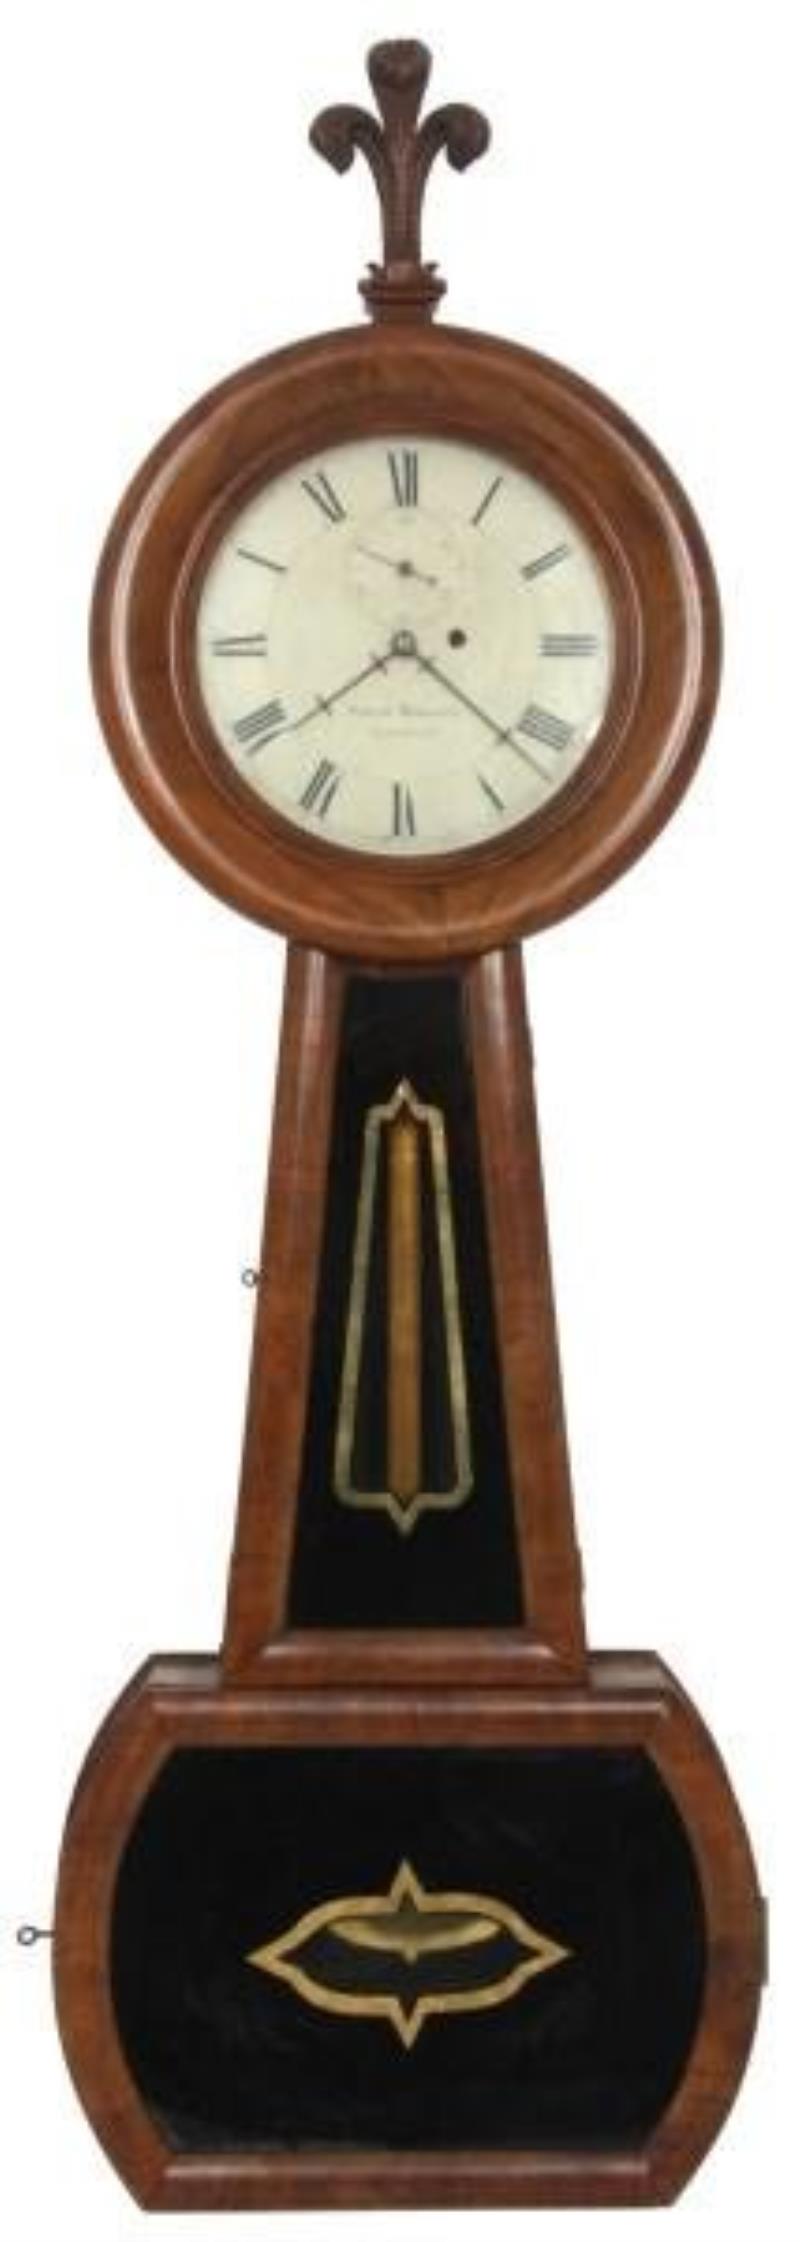 Attr. Simon Willard 5′ Weight Driven Banjo Clock